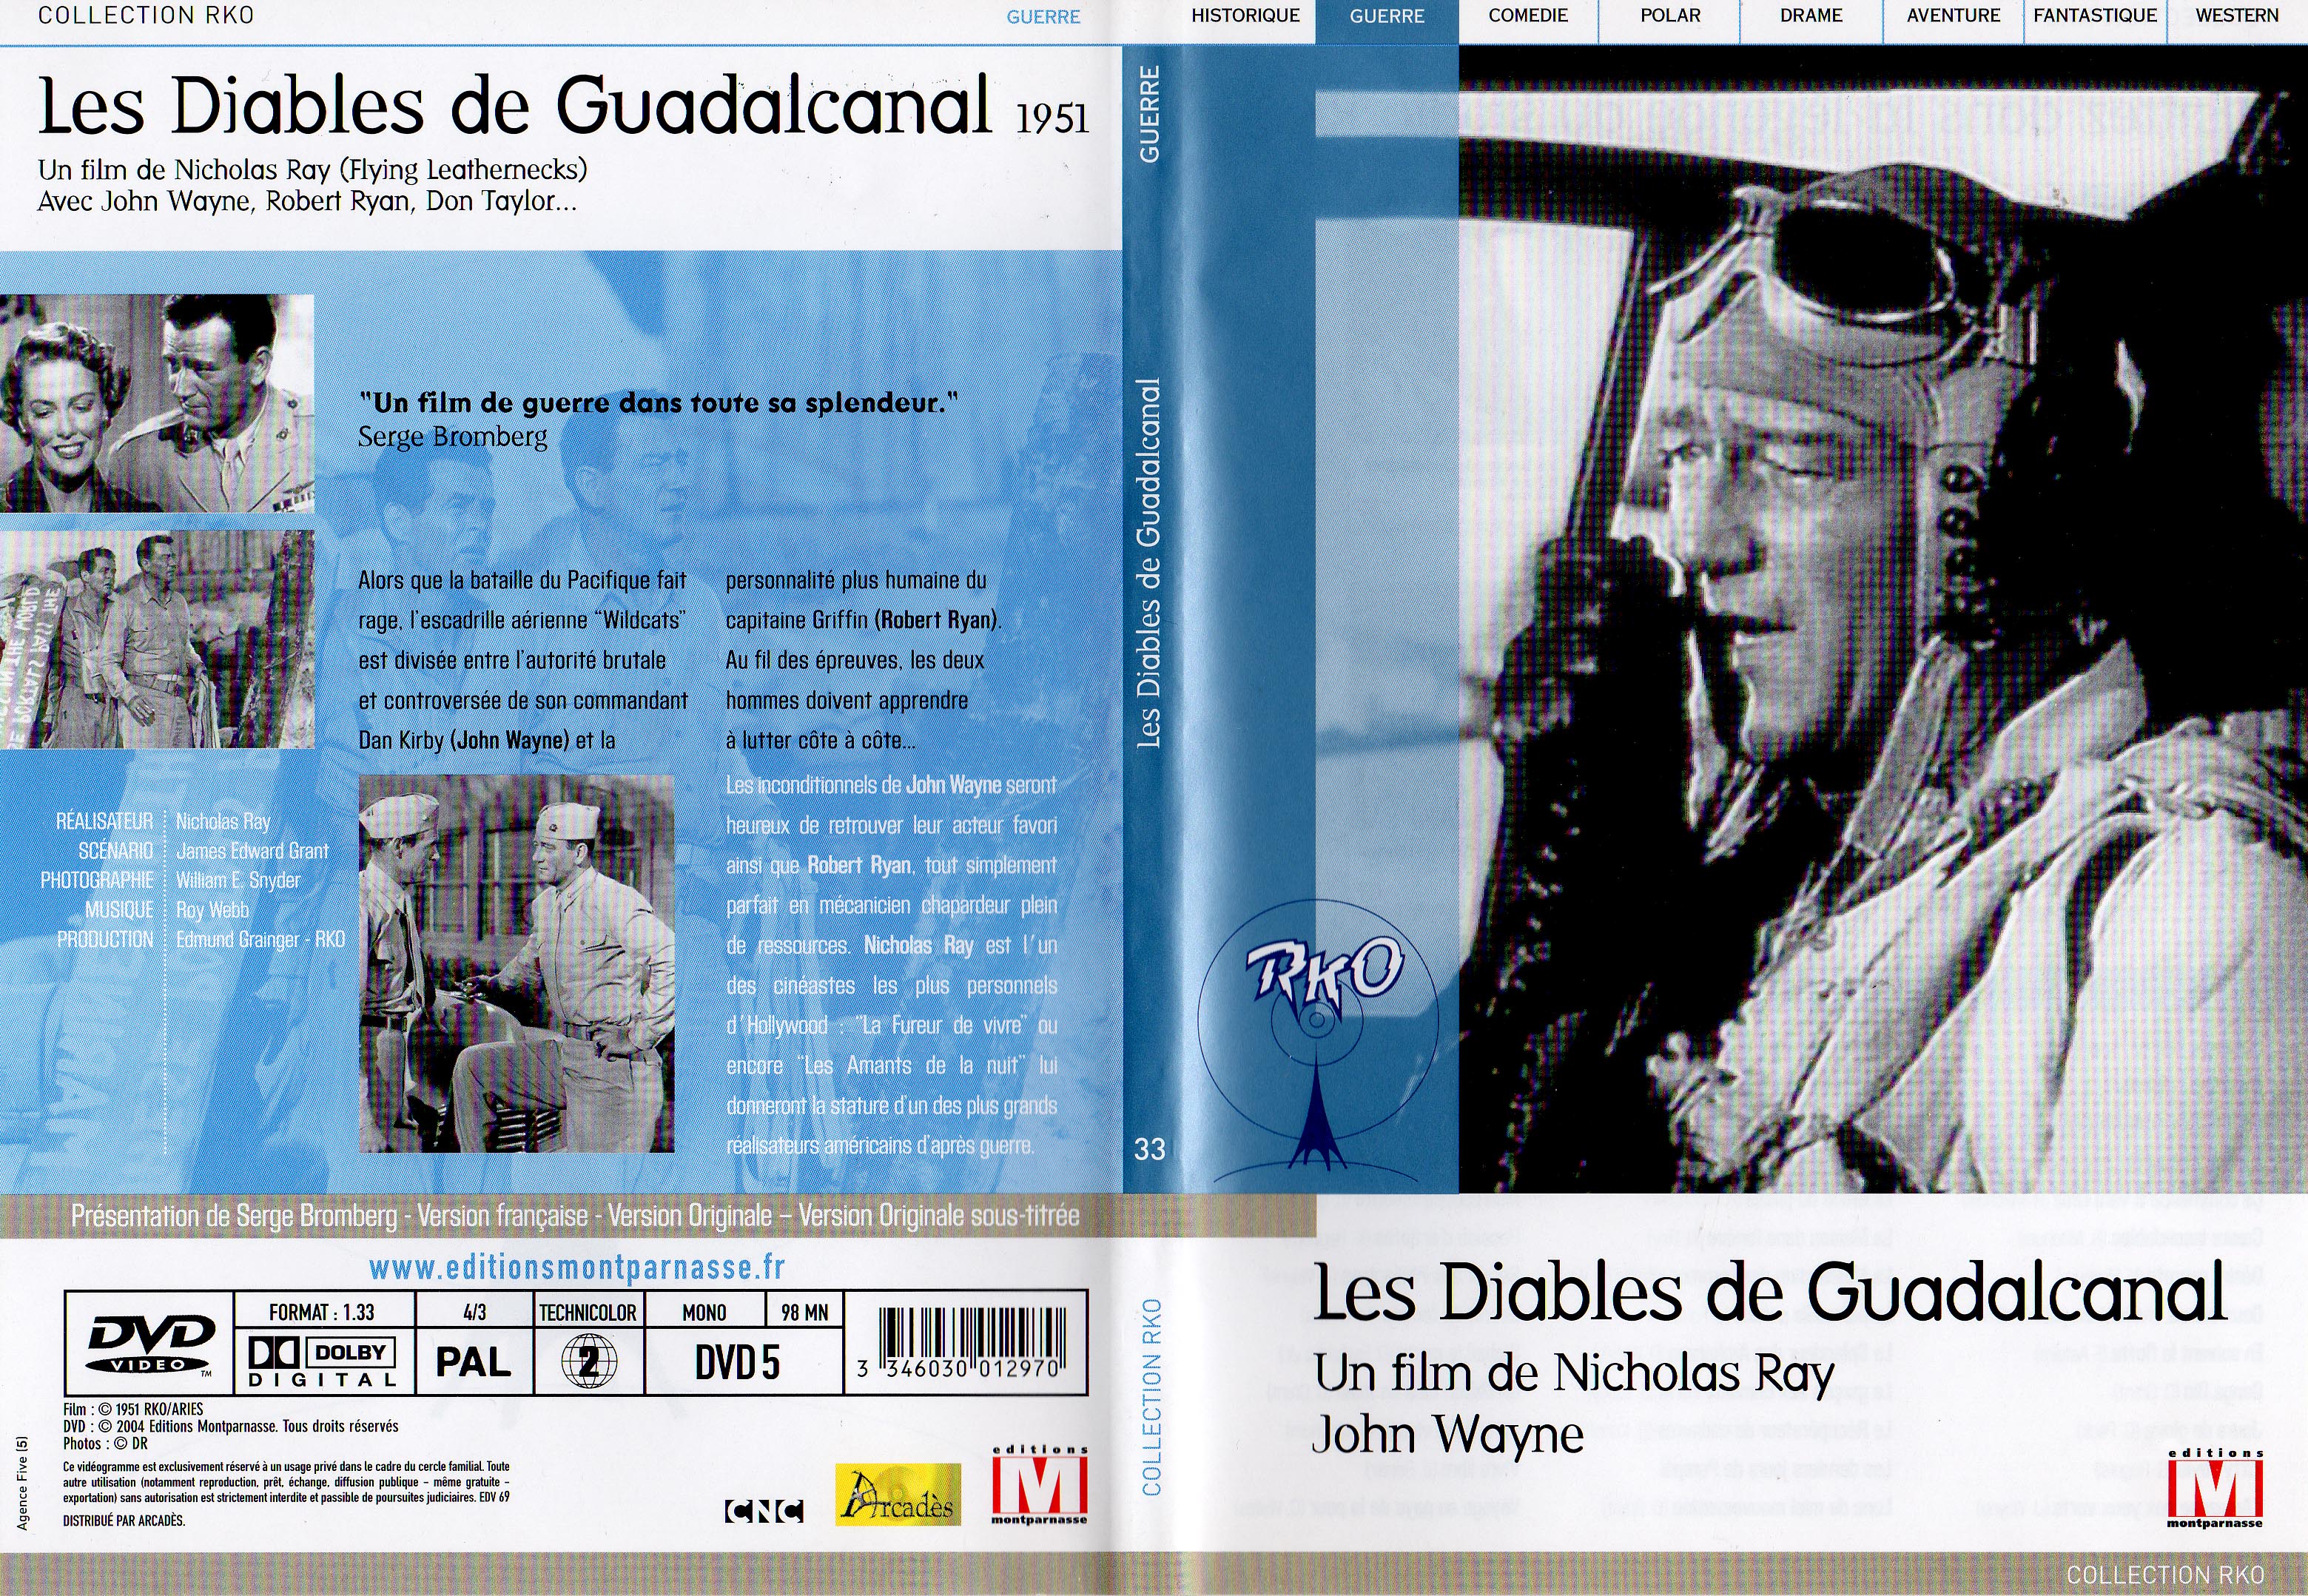 Jaquette DVD Les diables de Guadalcanal v3